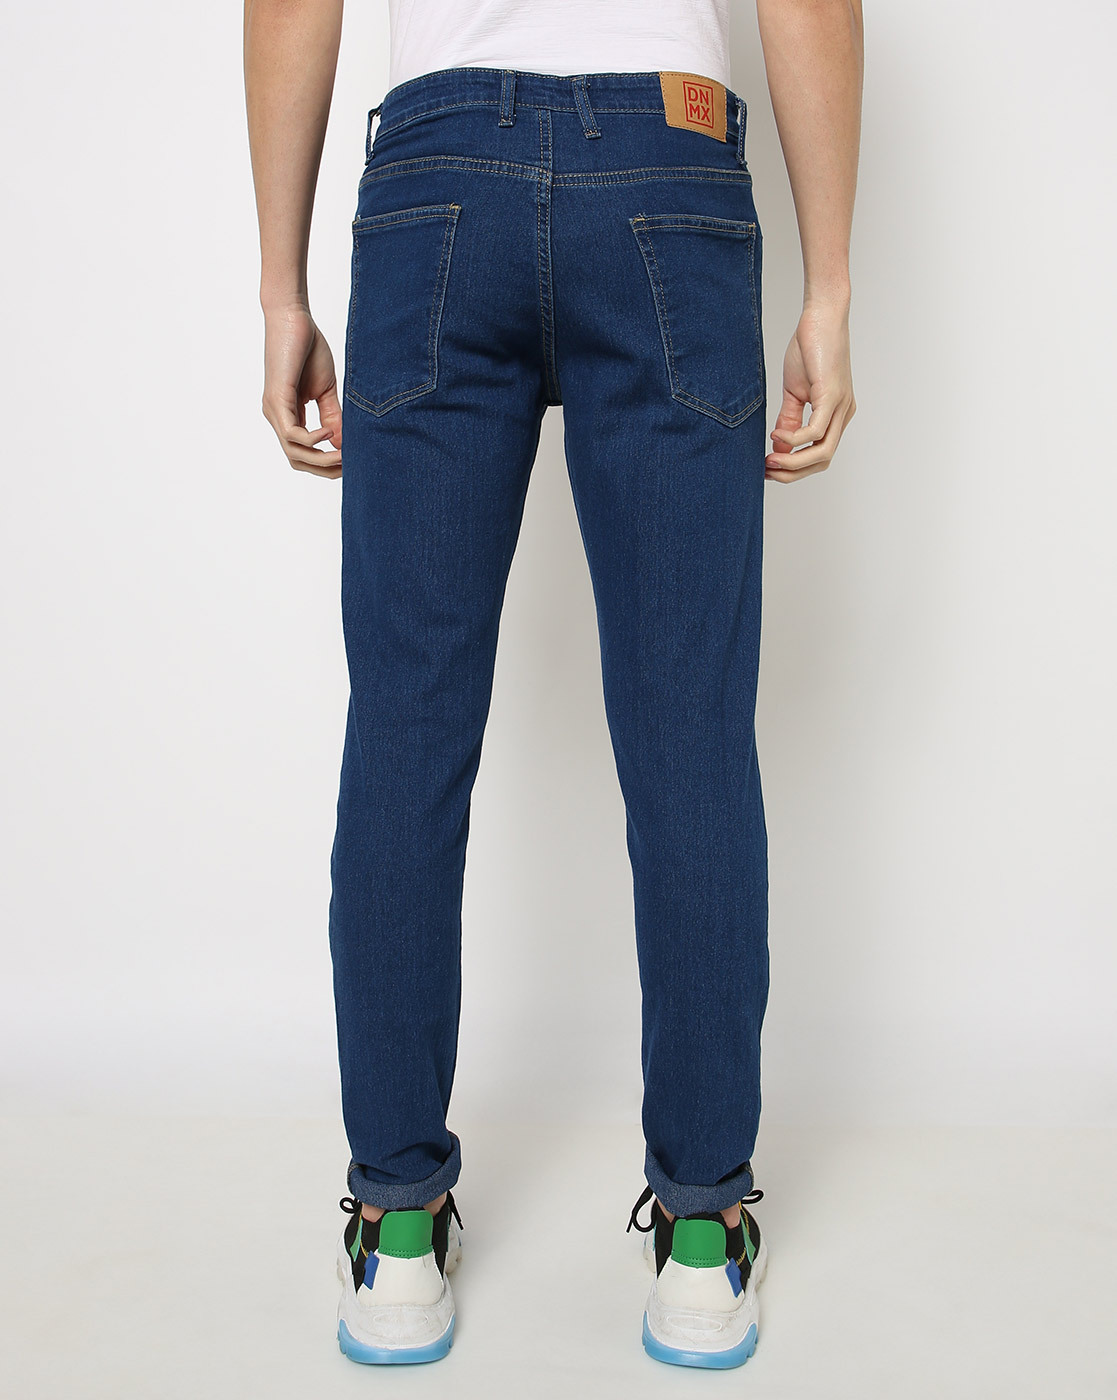 5 Pocket skinny denim jeans dark blue - TEEN GIRLS Denim Jeans |